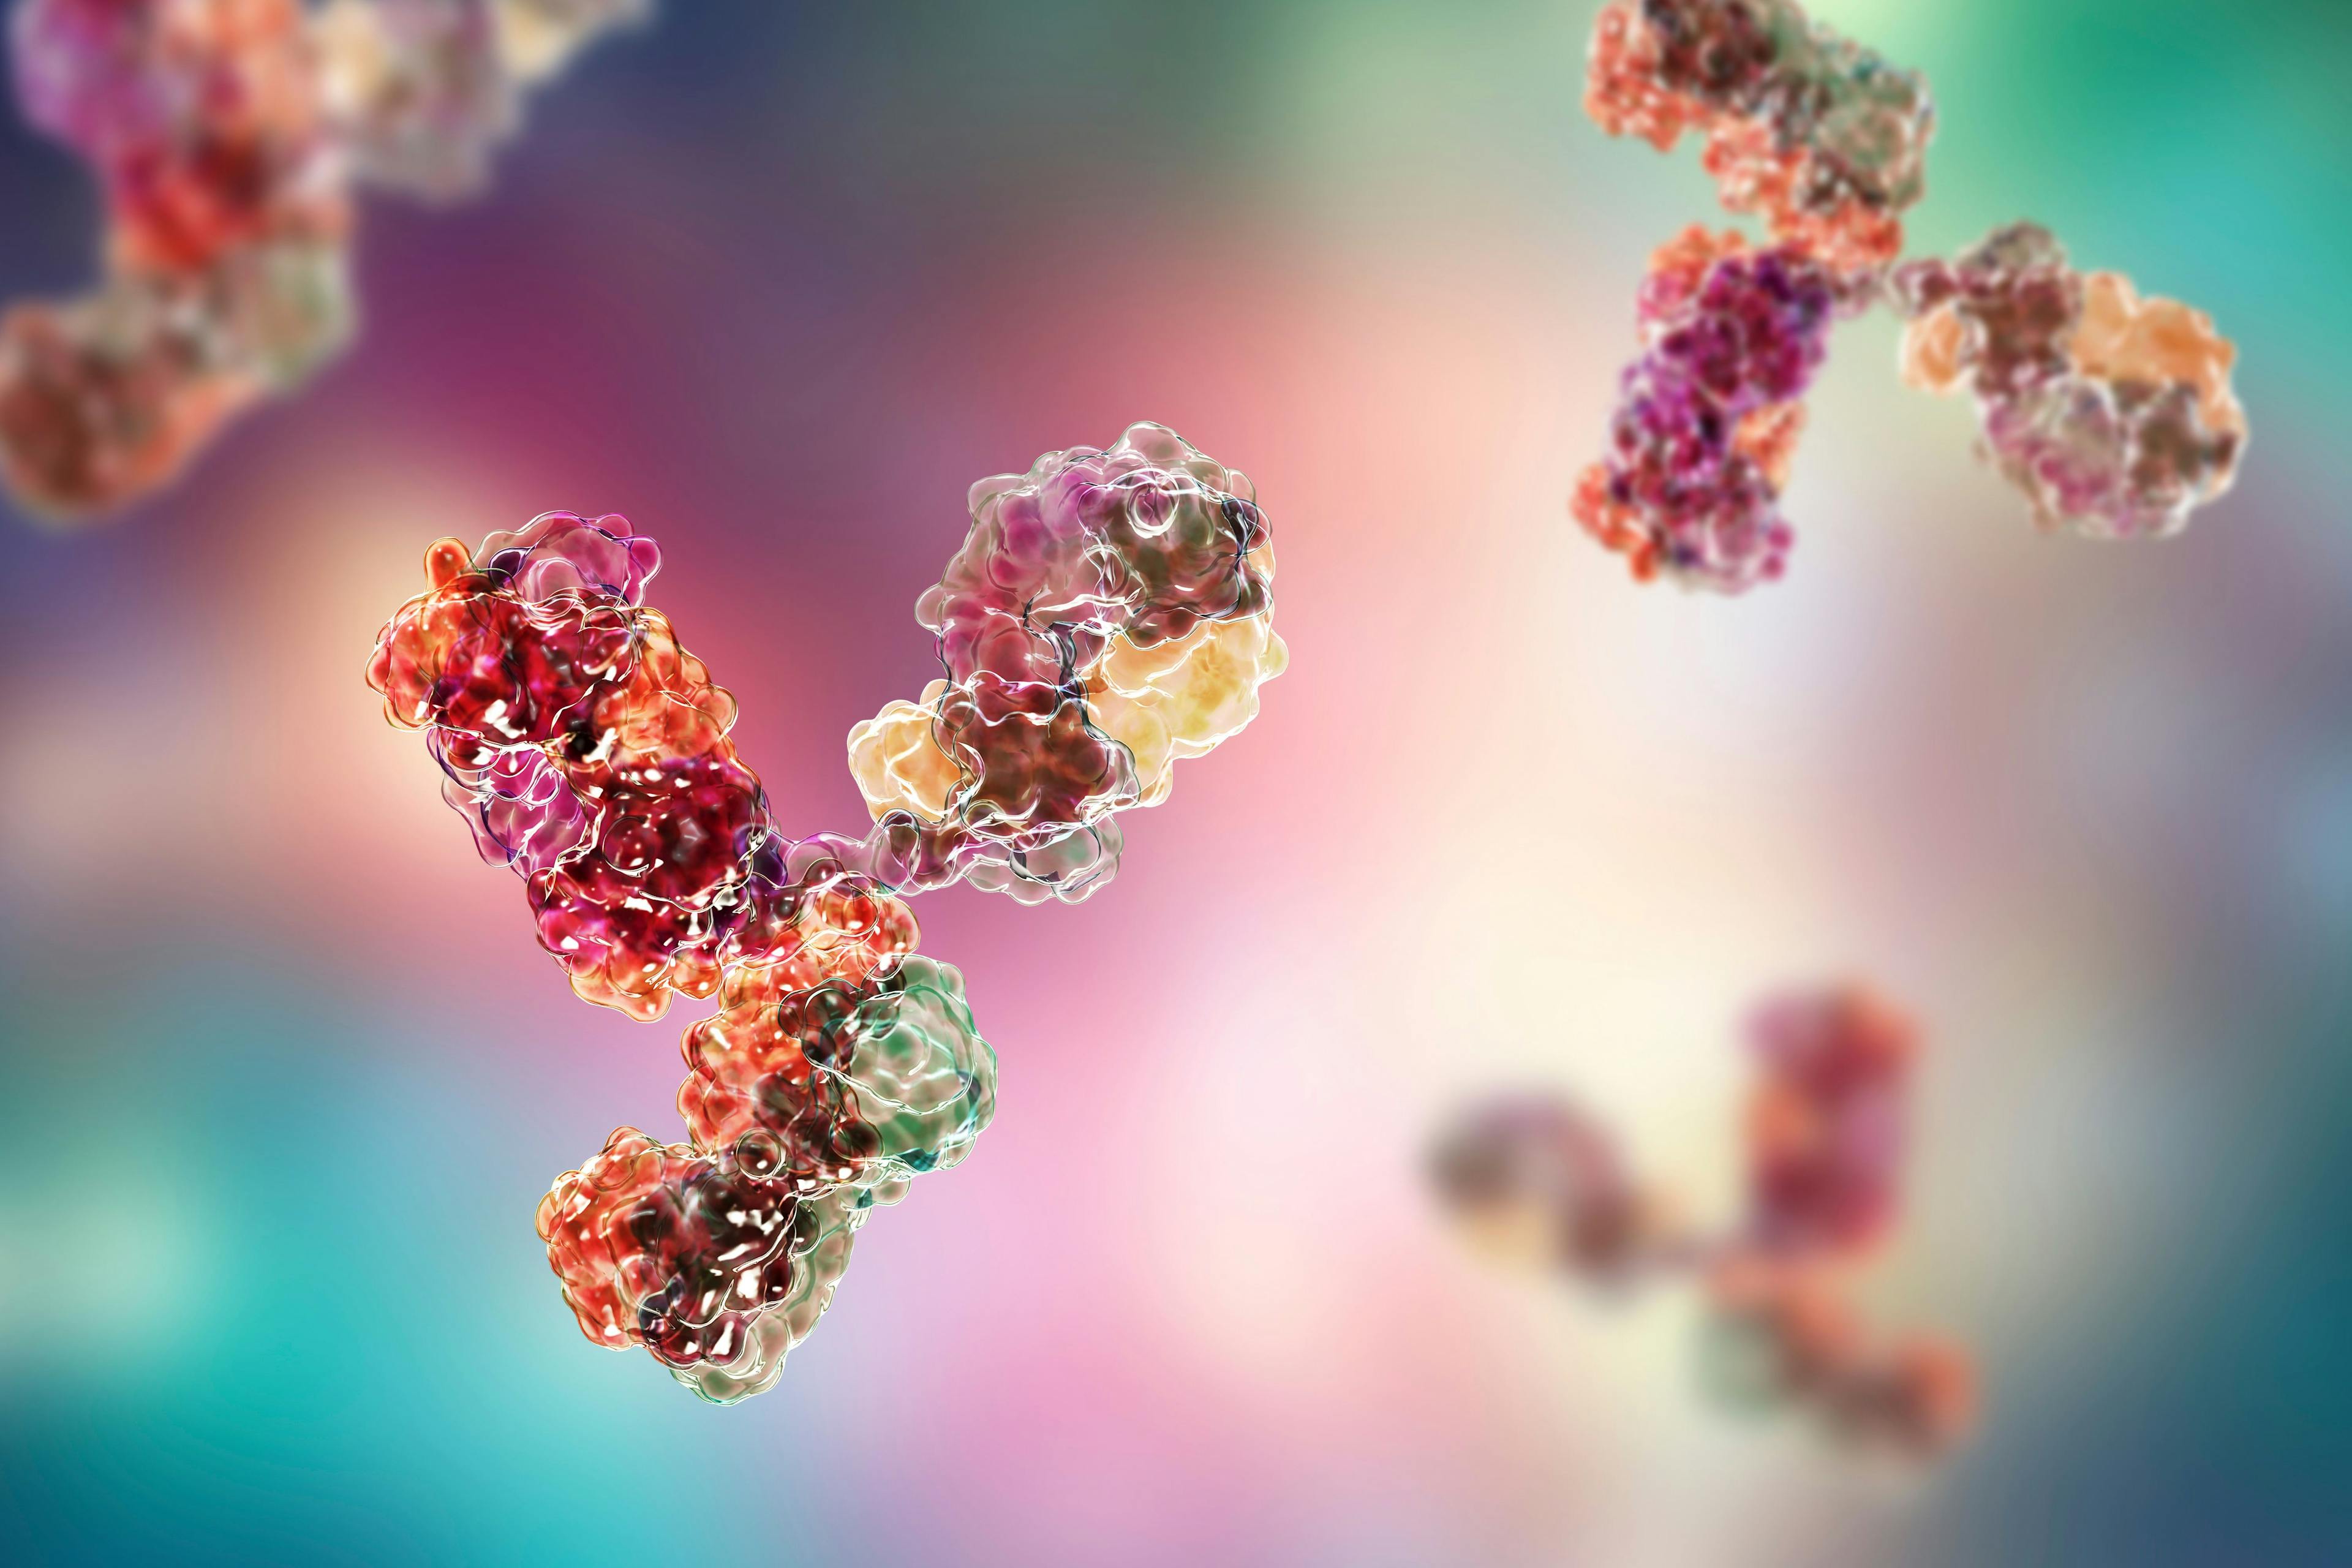 Monoclonal antibodies | Image credit: Dr_Microbe - stock.adobe.com